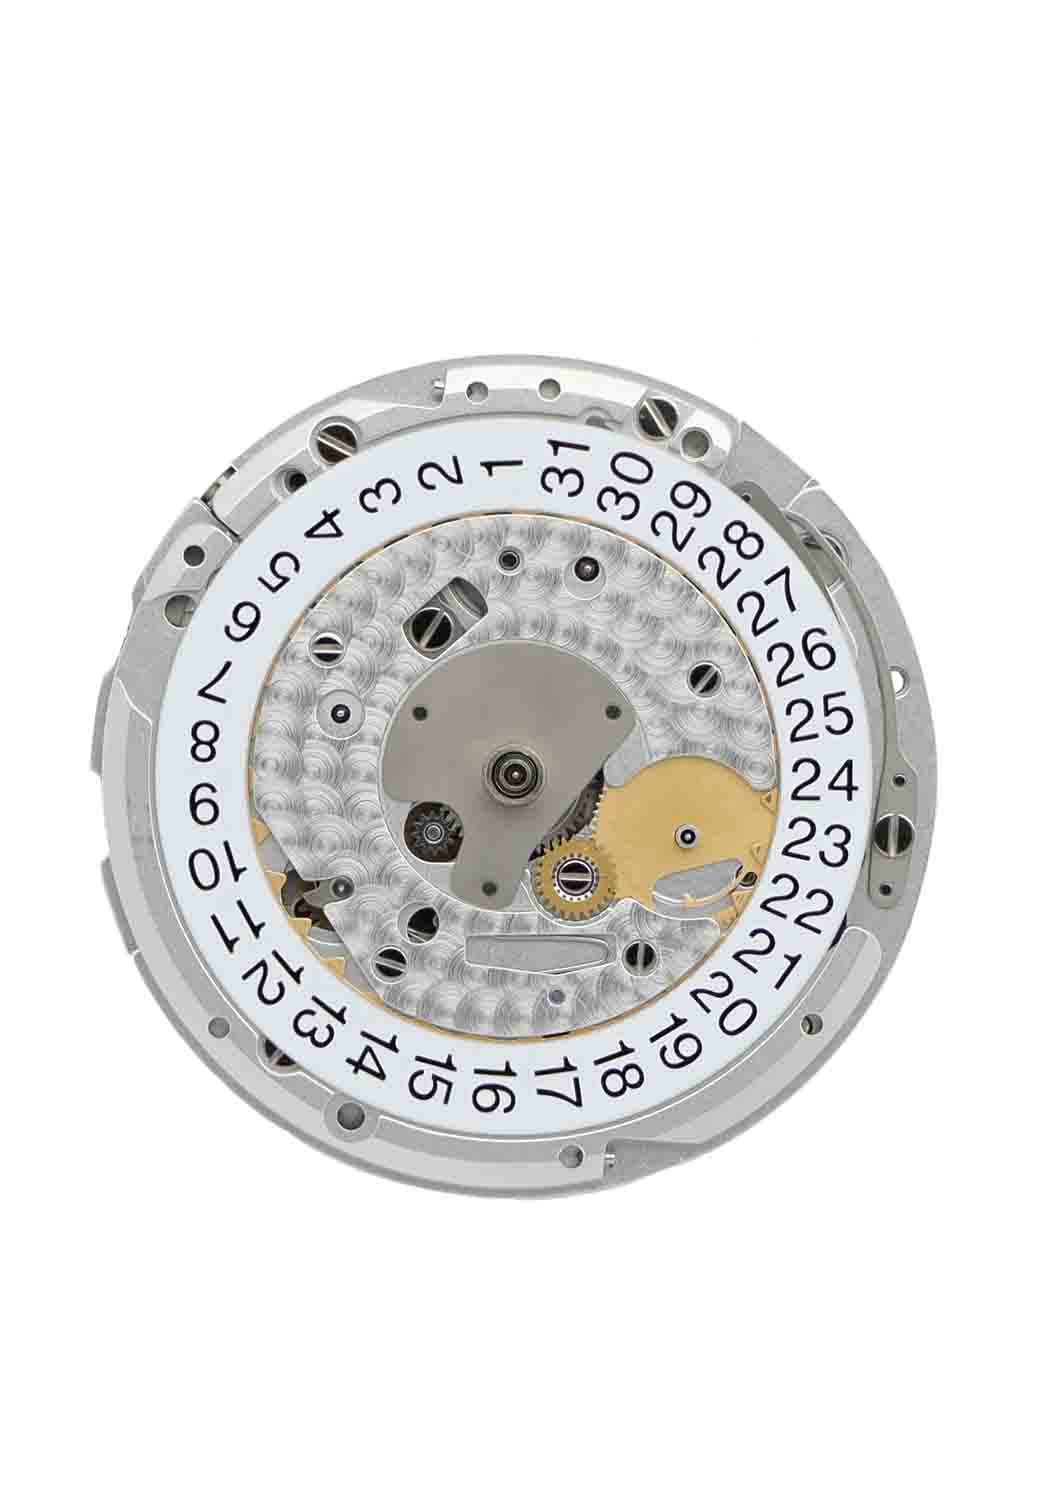 Ulysse Nardin Diver Chronograph Calibre 1503-170-3/92 | OsterJewelers.com